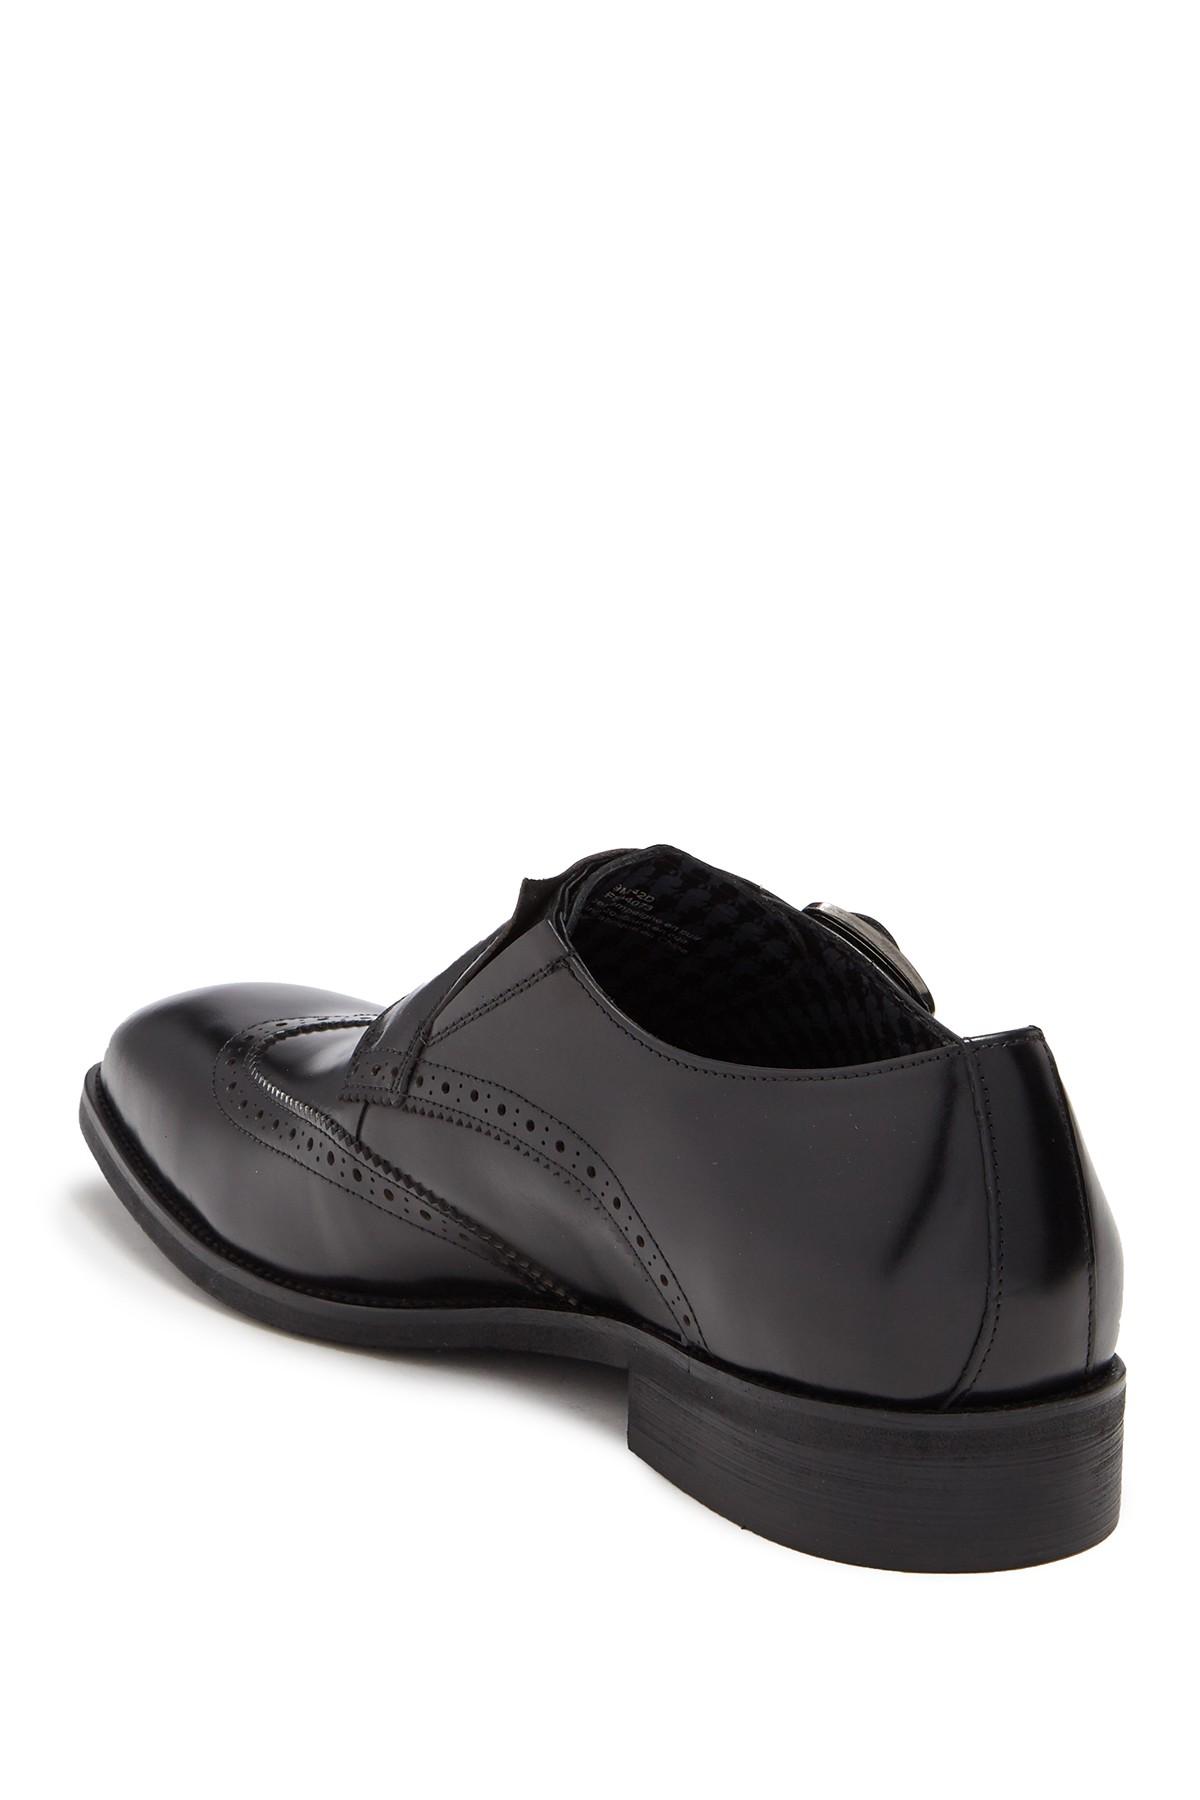 Karl Lagerfeld Wingtip Monk-strap Leather Dress Shoe in Black for Men ...